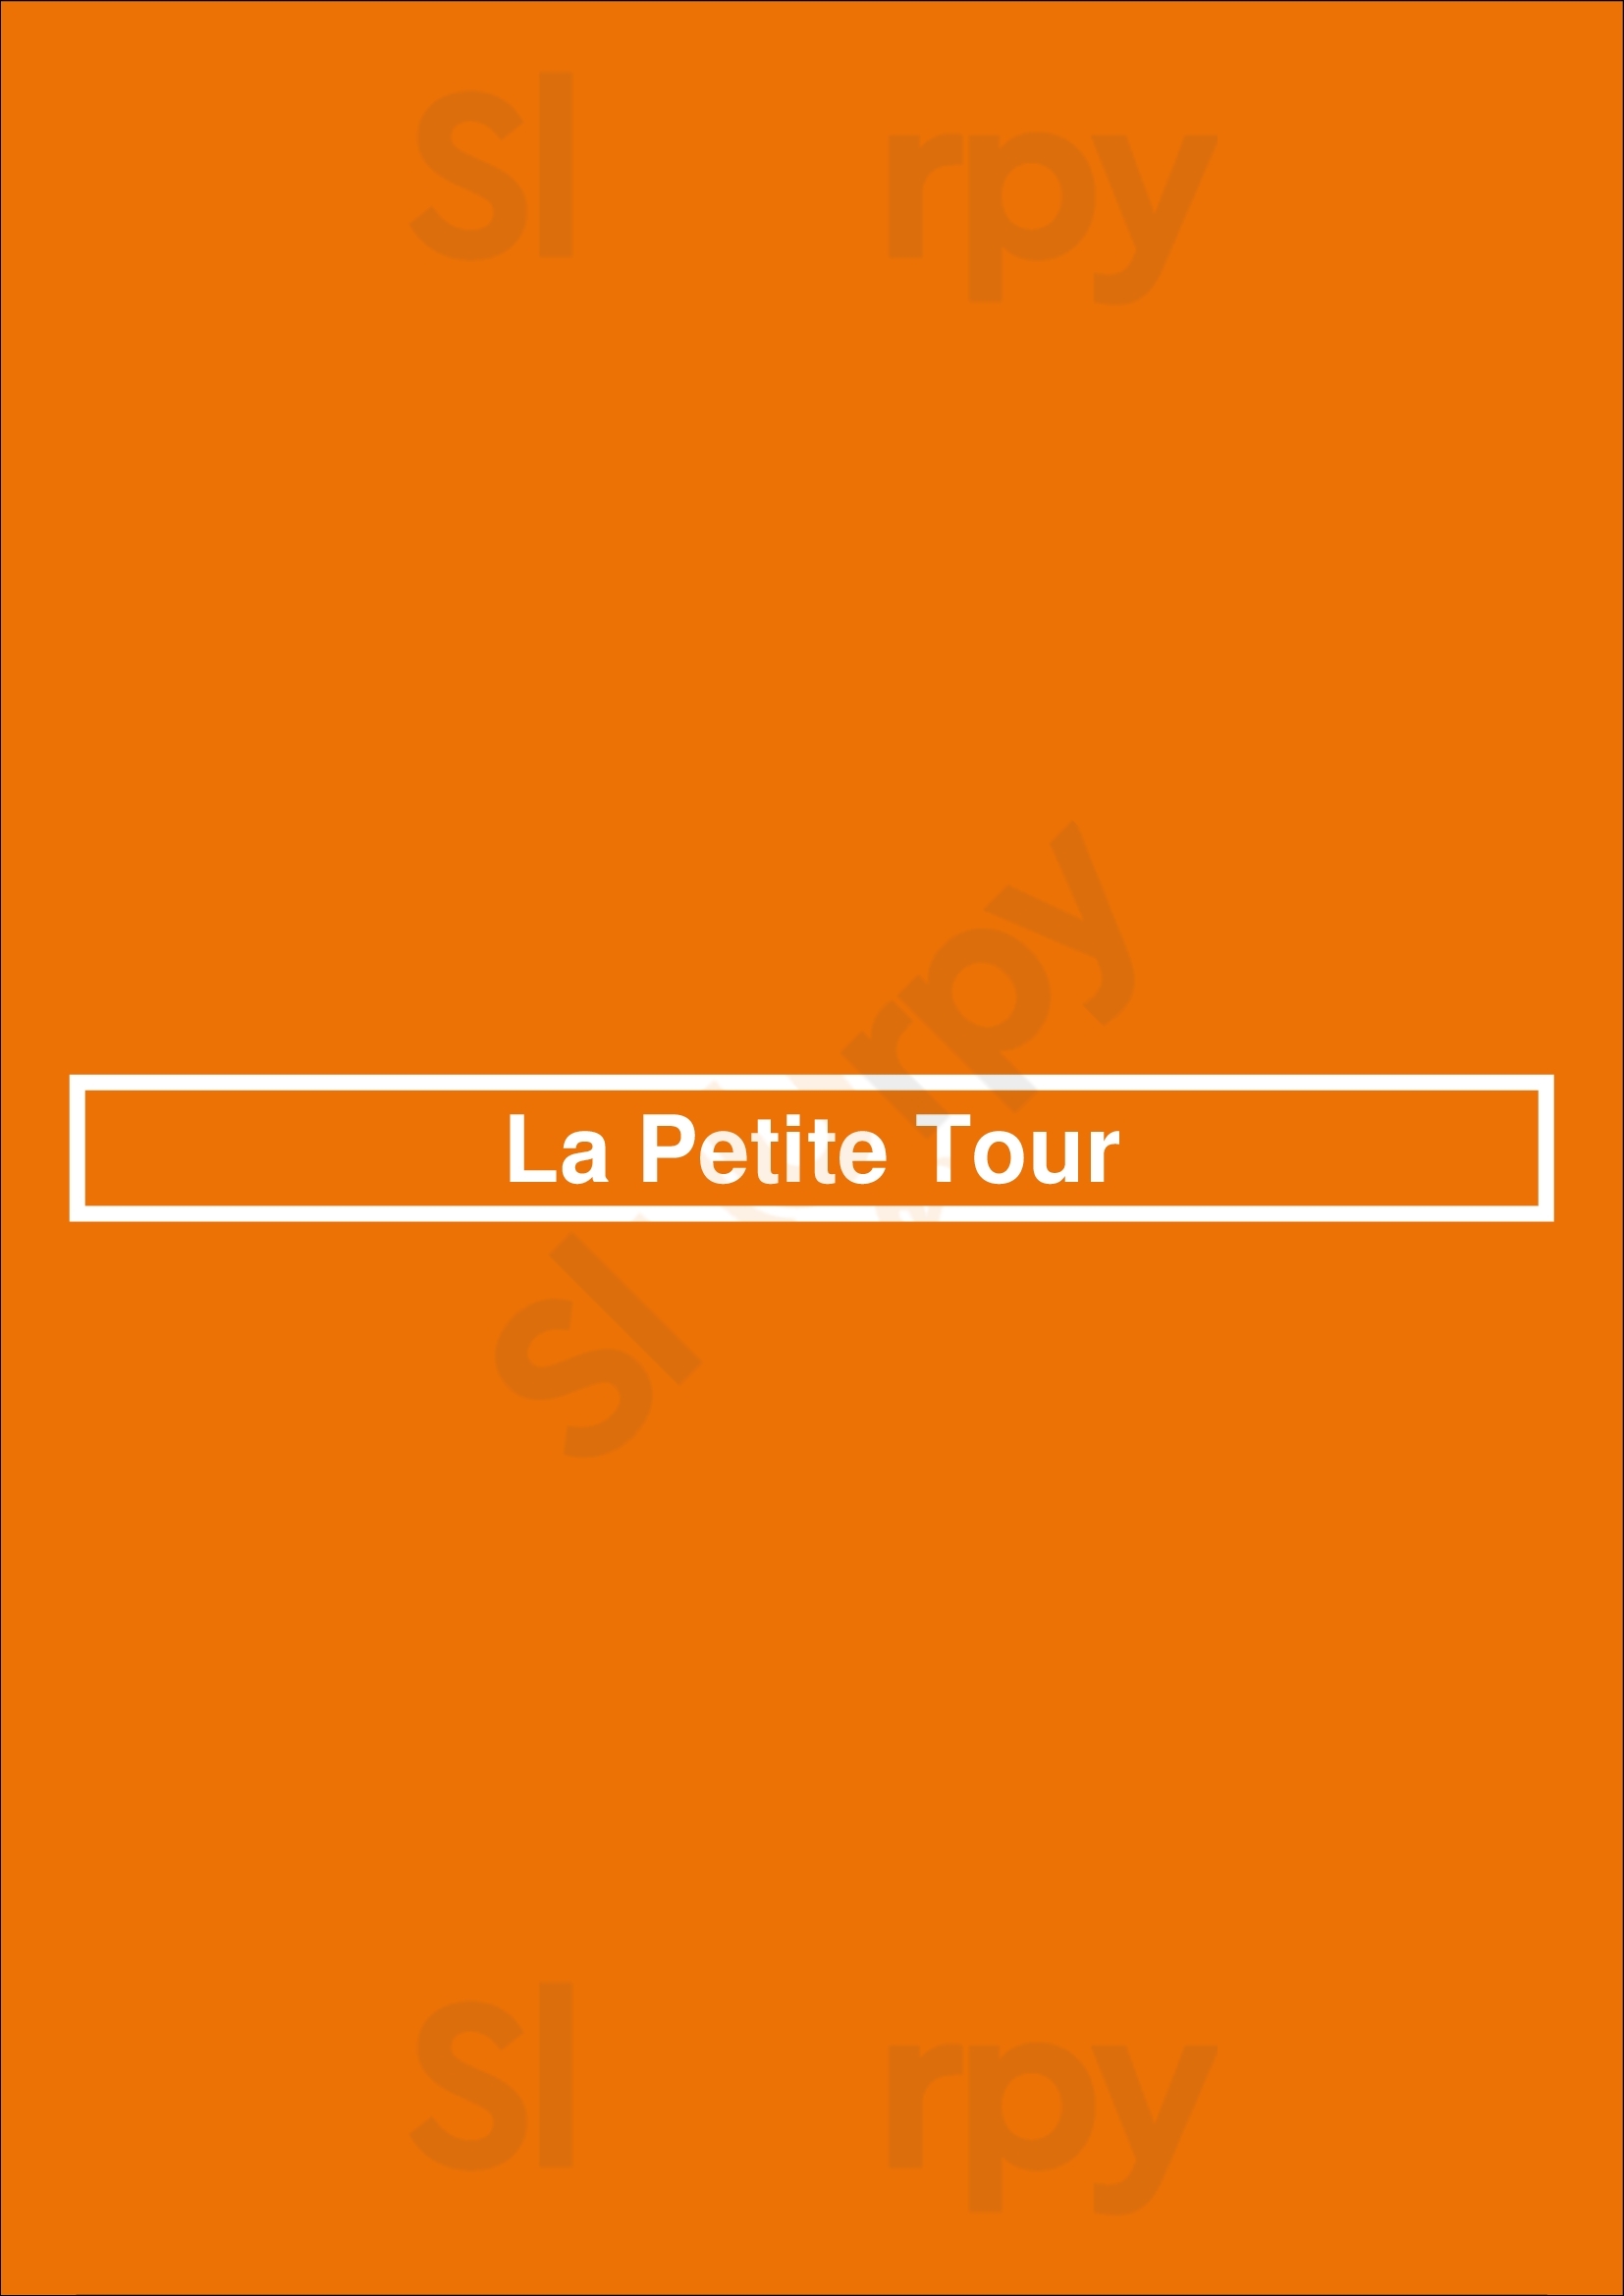 La Petite Tour Paris Menu - 1